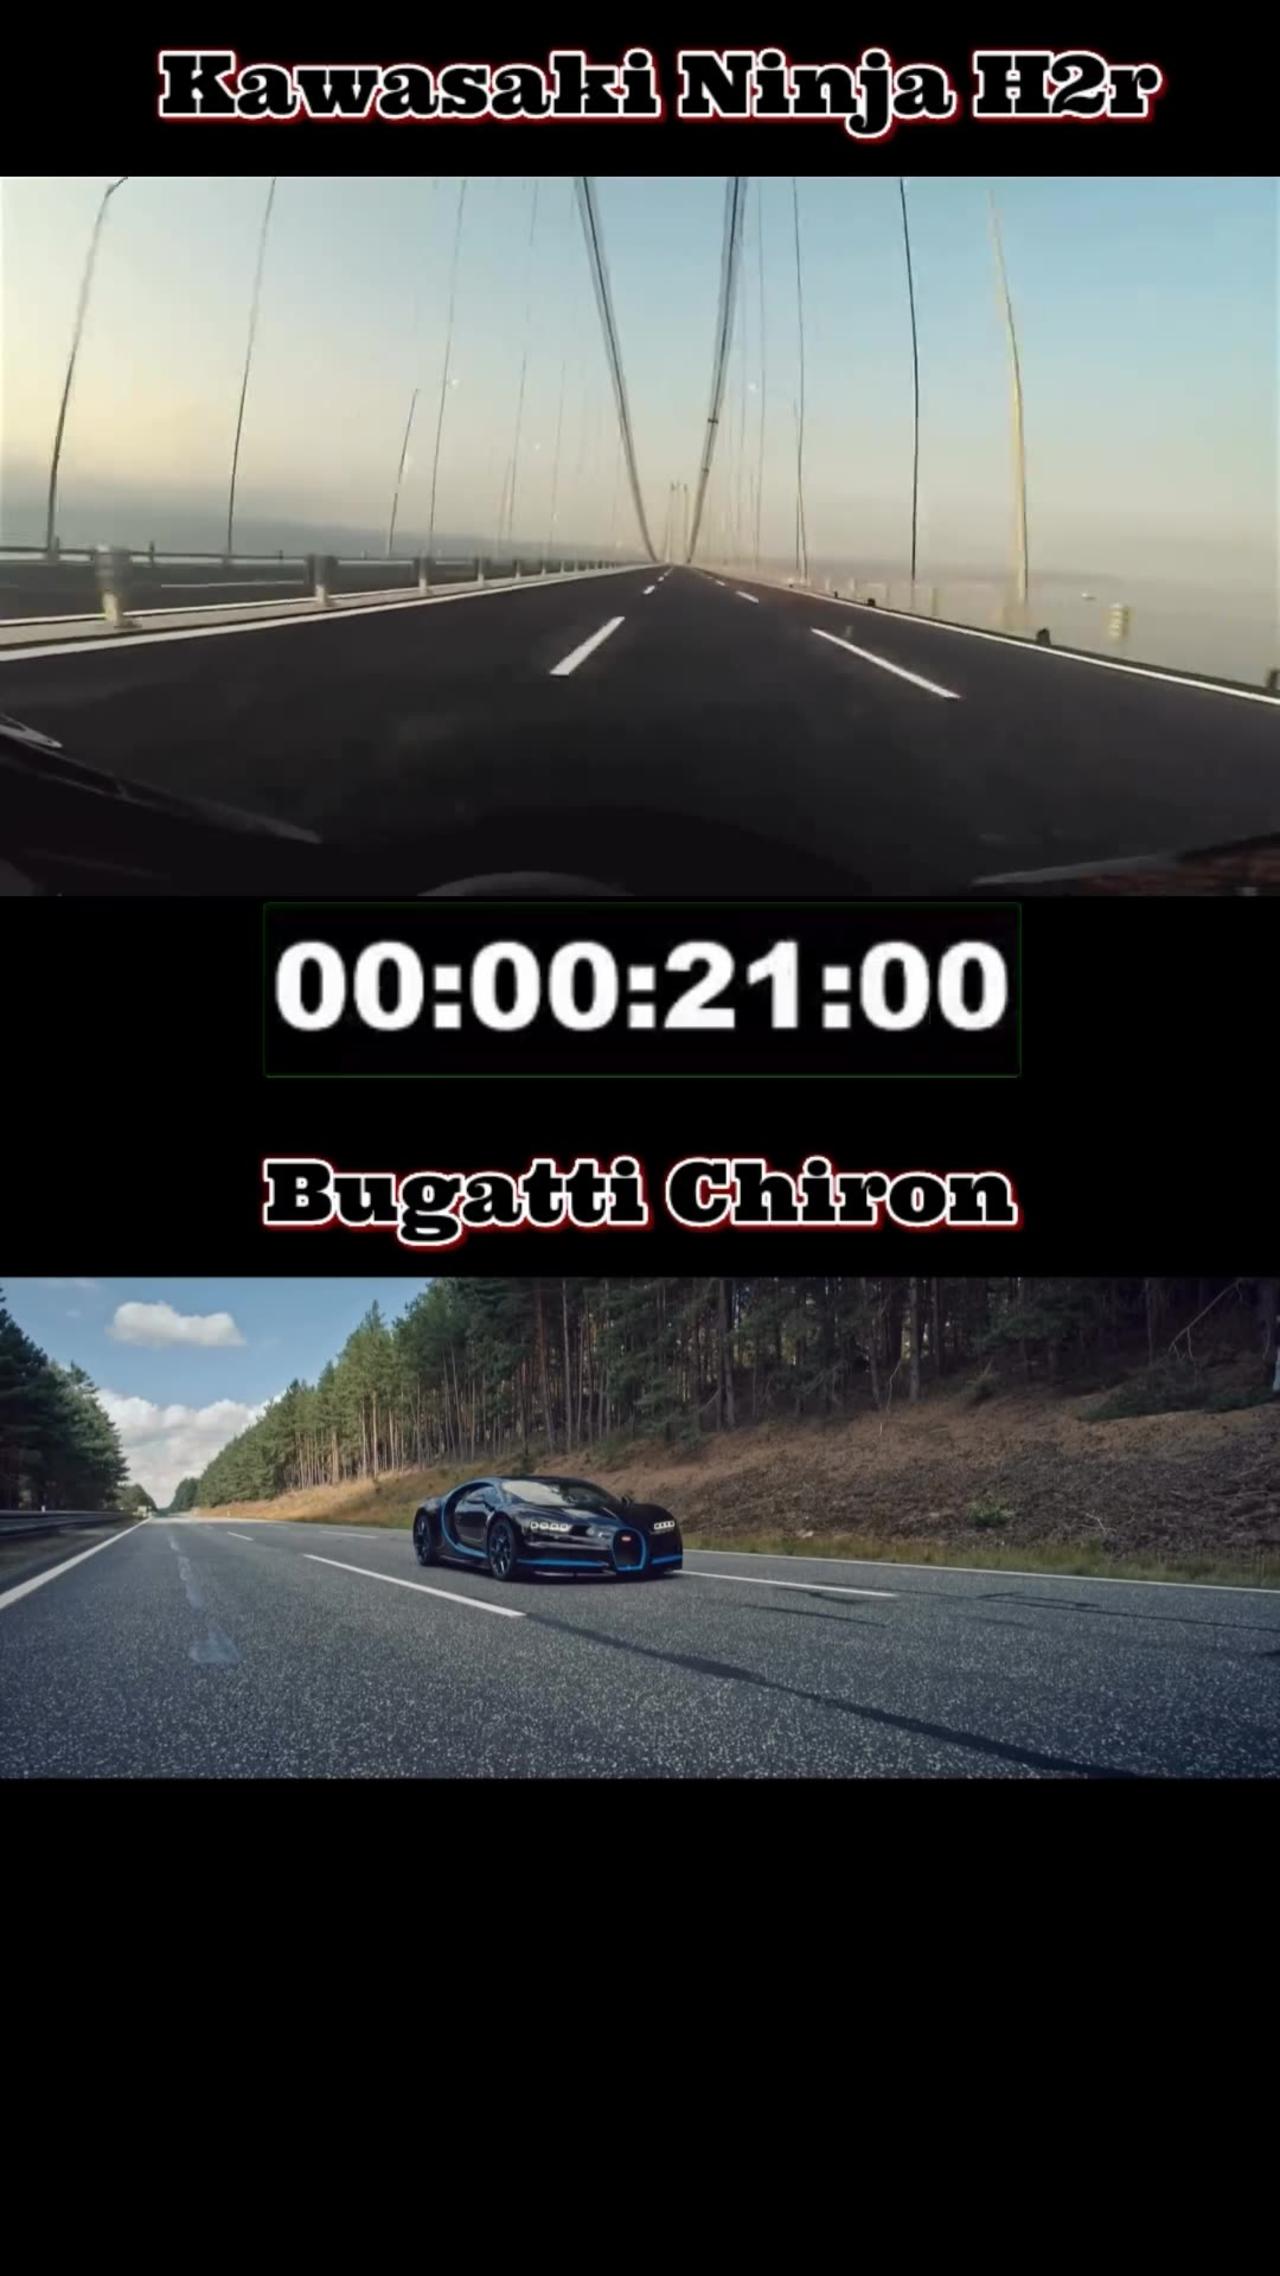 #Bugatti #Chiron Vs #Kawasaki #Ninja